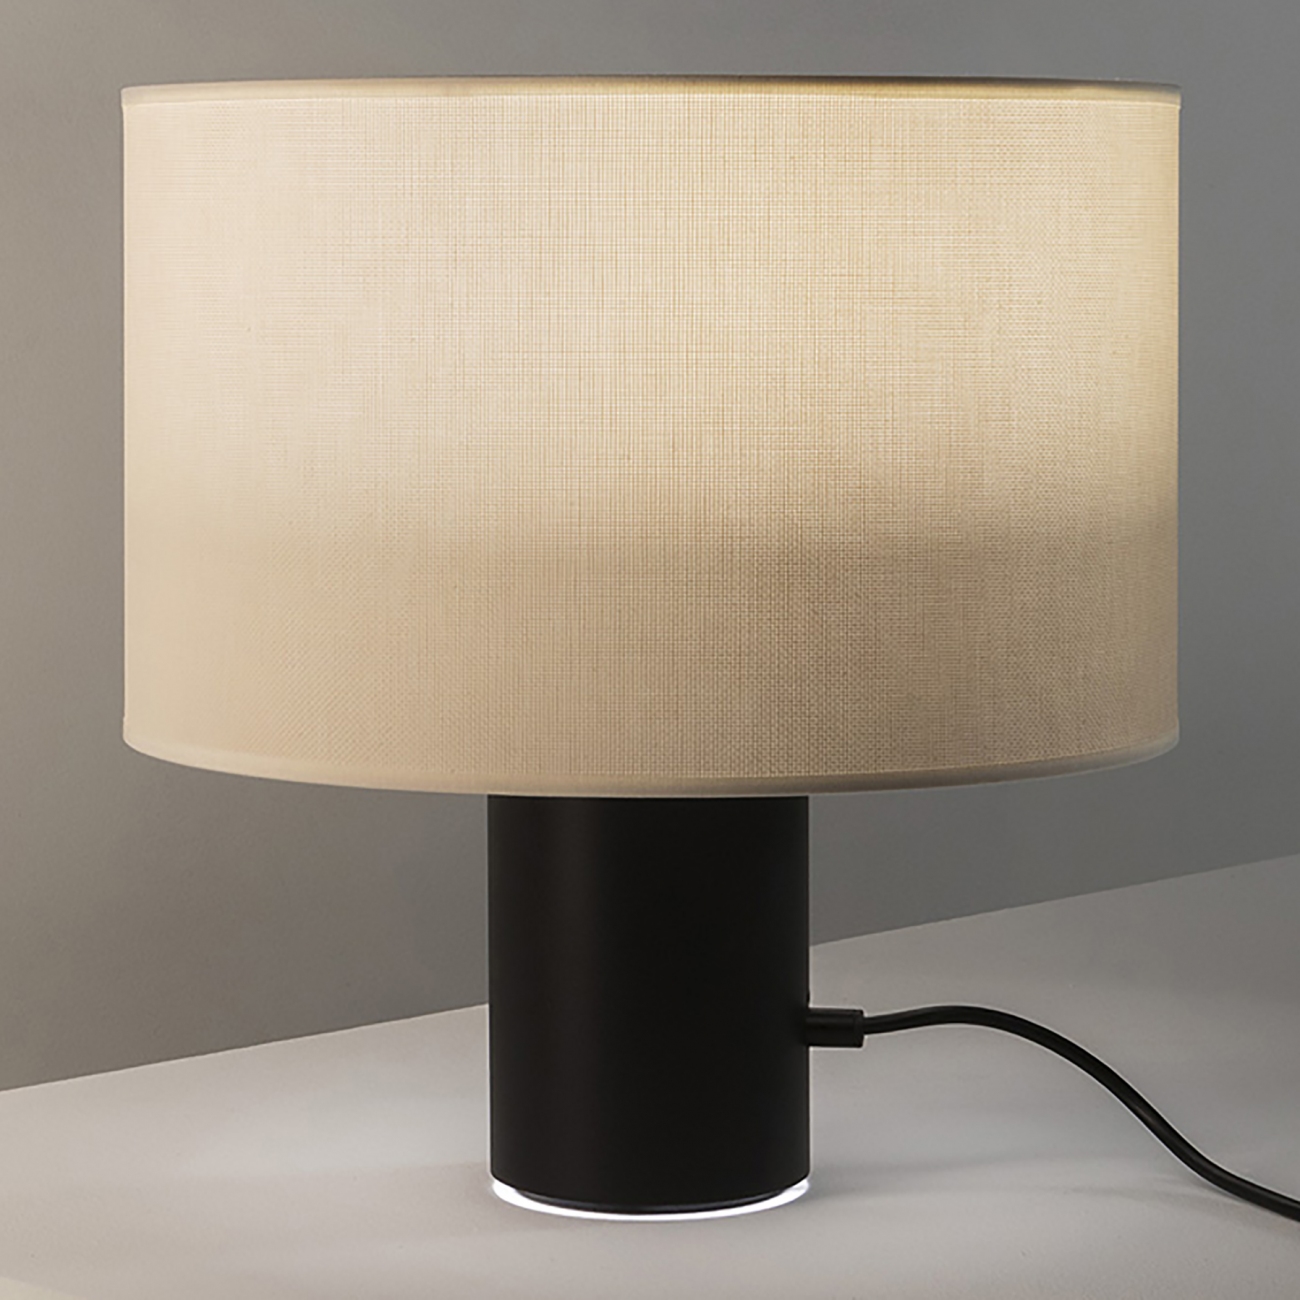 Estiluz Cyls table lamp